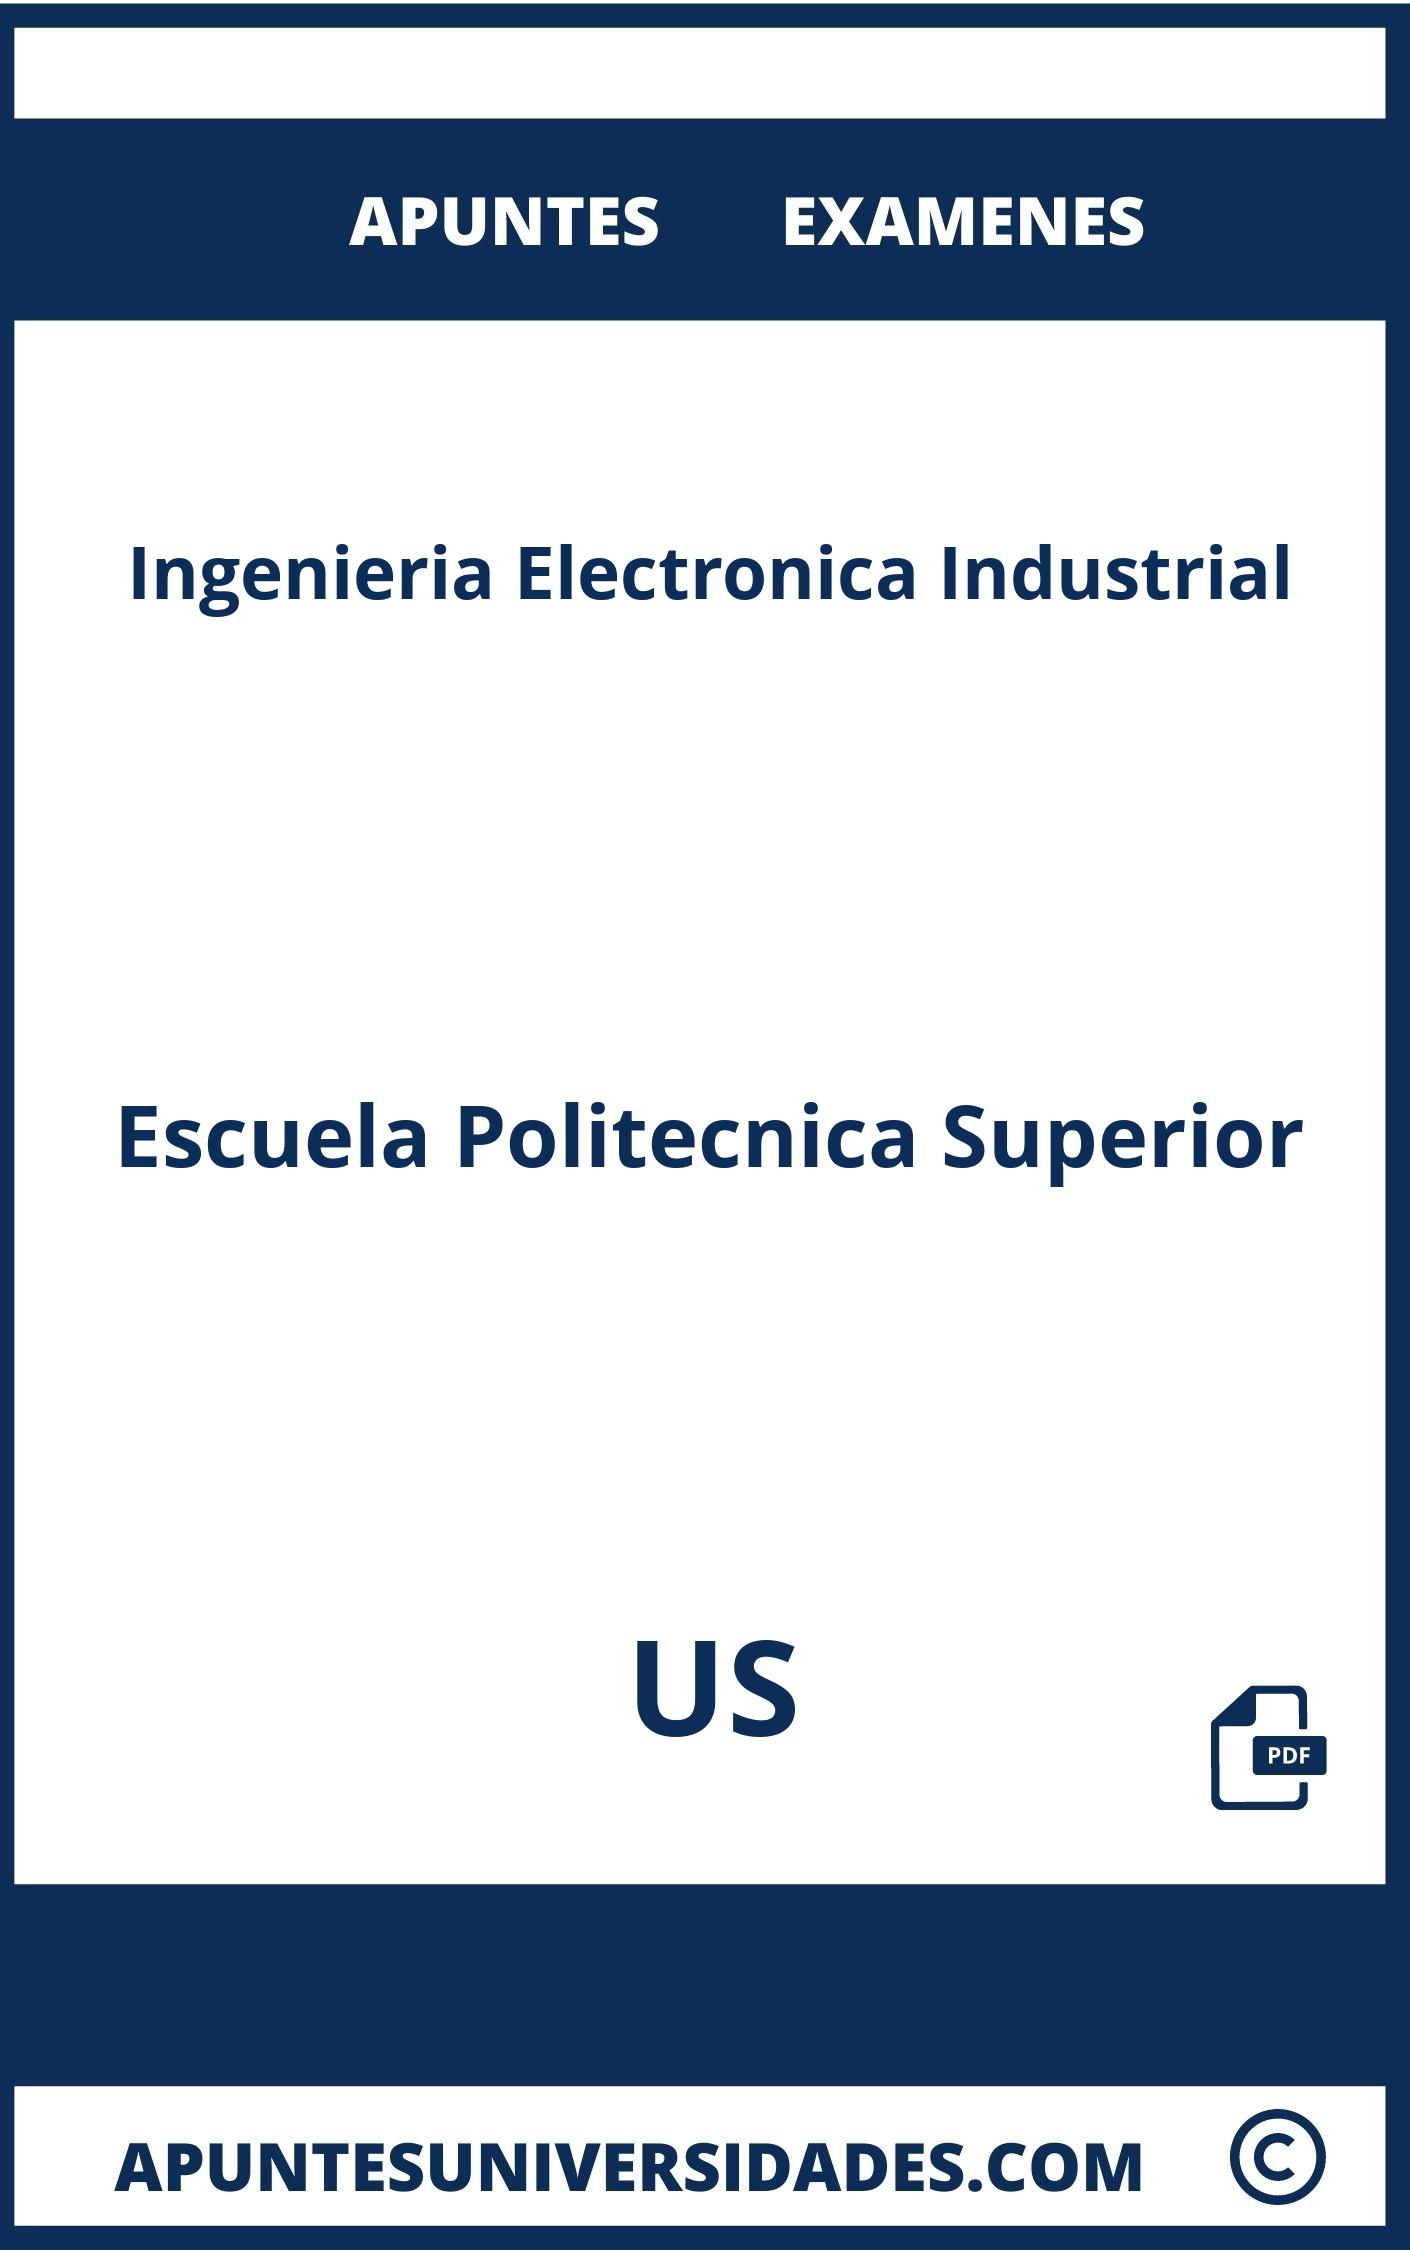 Examenes Apuntes Ingenieria Electronica Industrial US